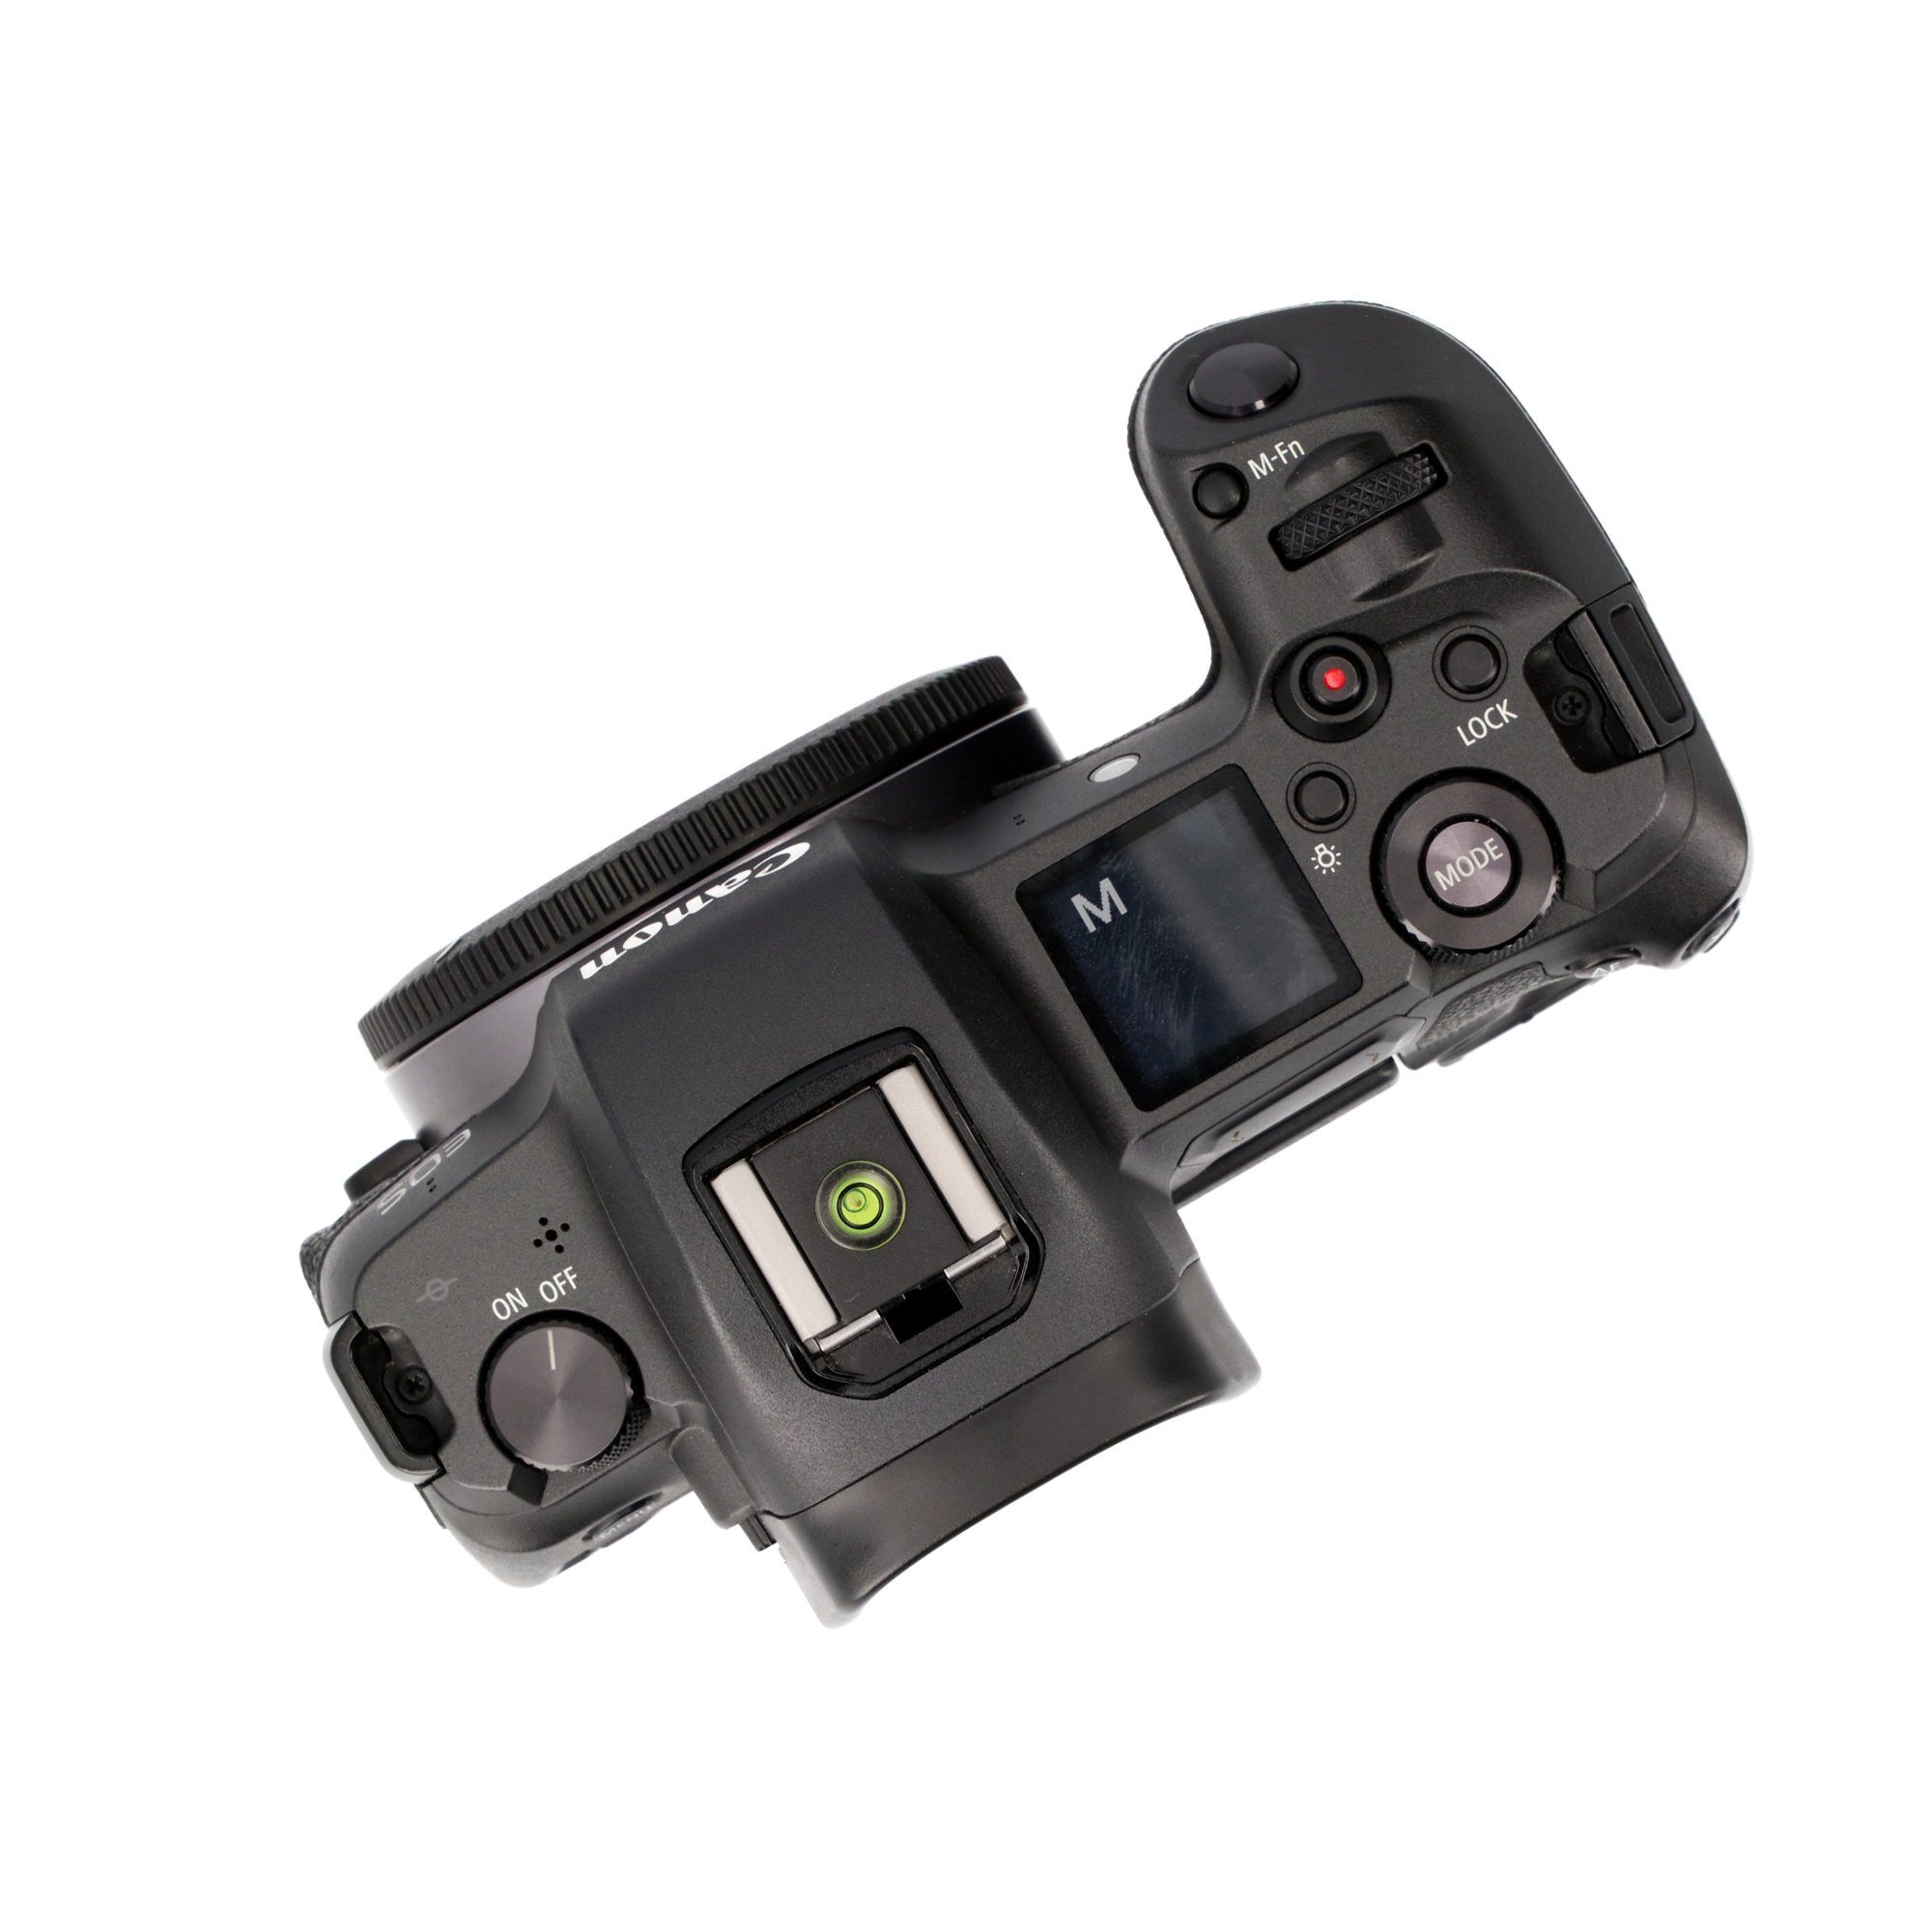 S5 + Dosenlibelle Standard-Blitzschuh ayex Systemkamera Wasserwaage Blitzschuhabdeckung